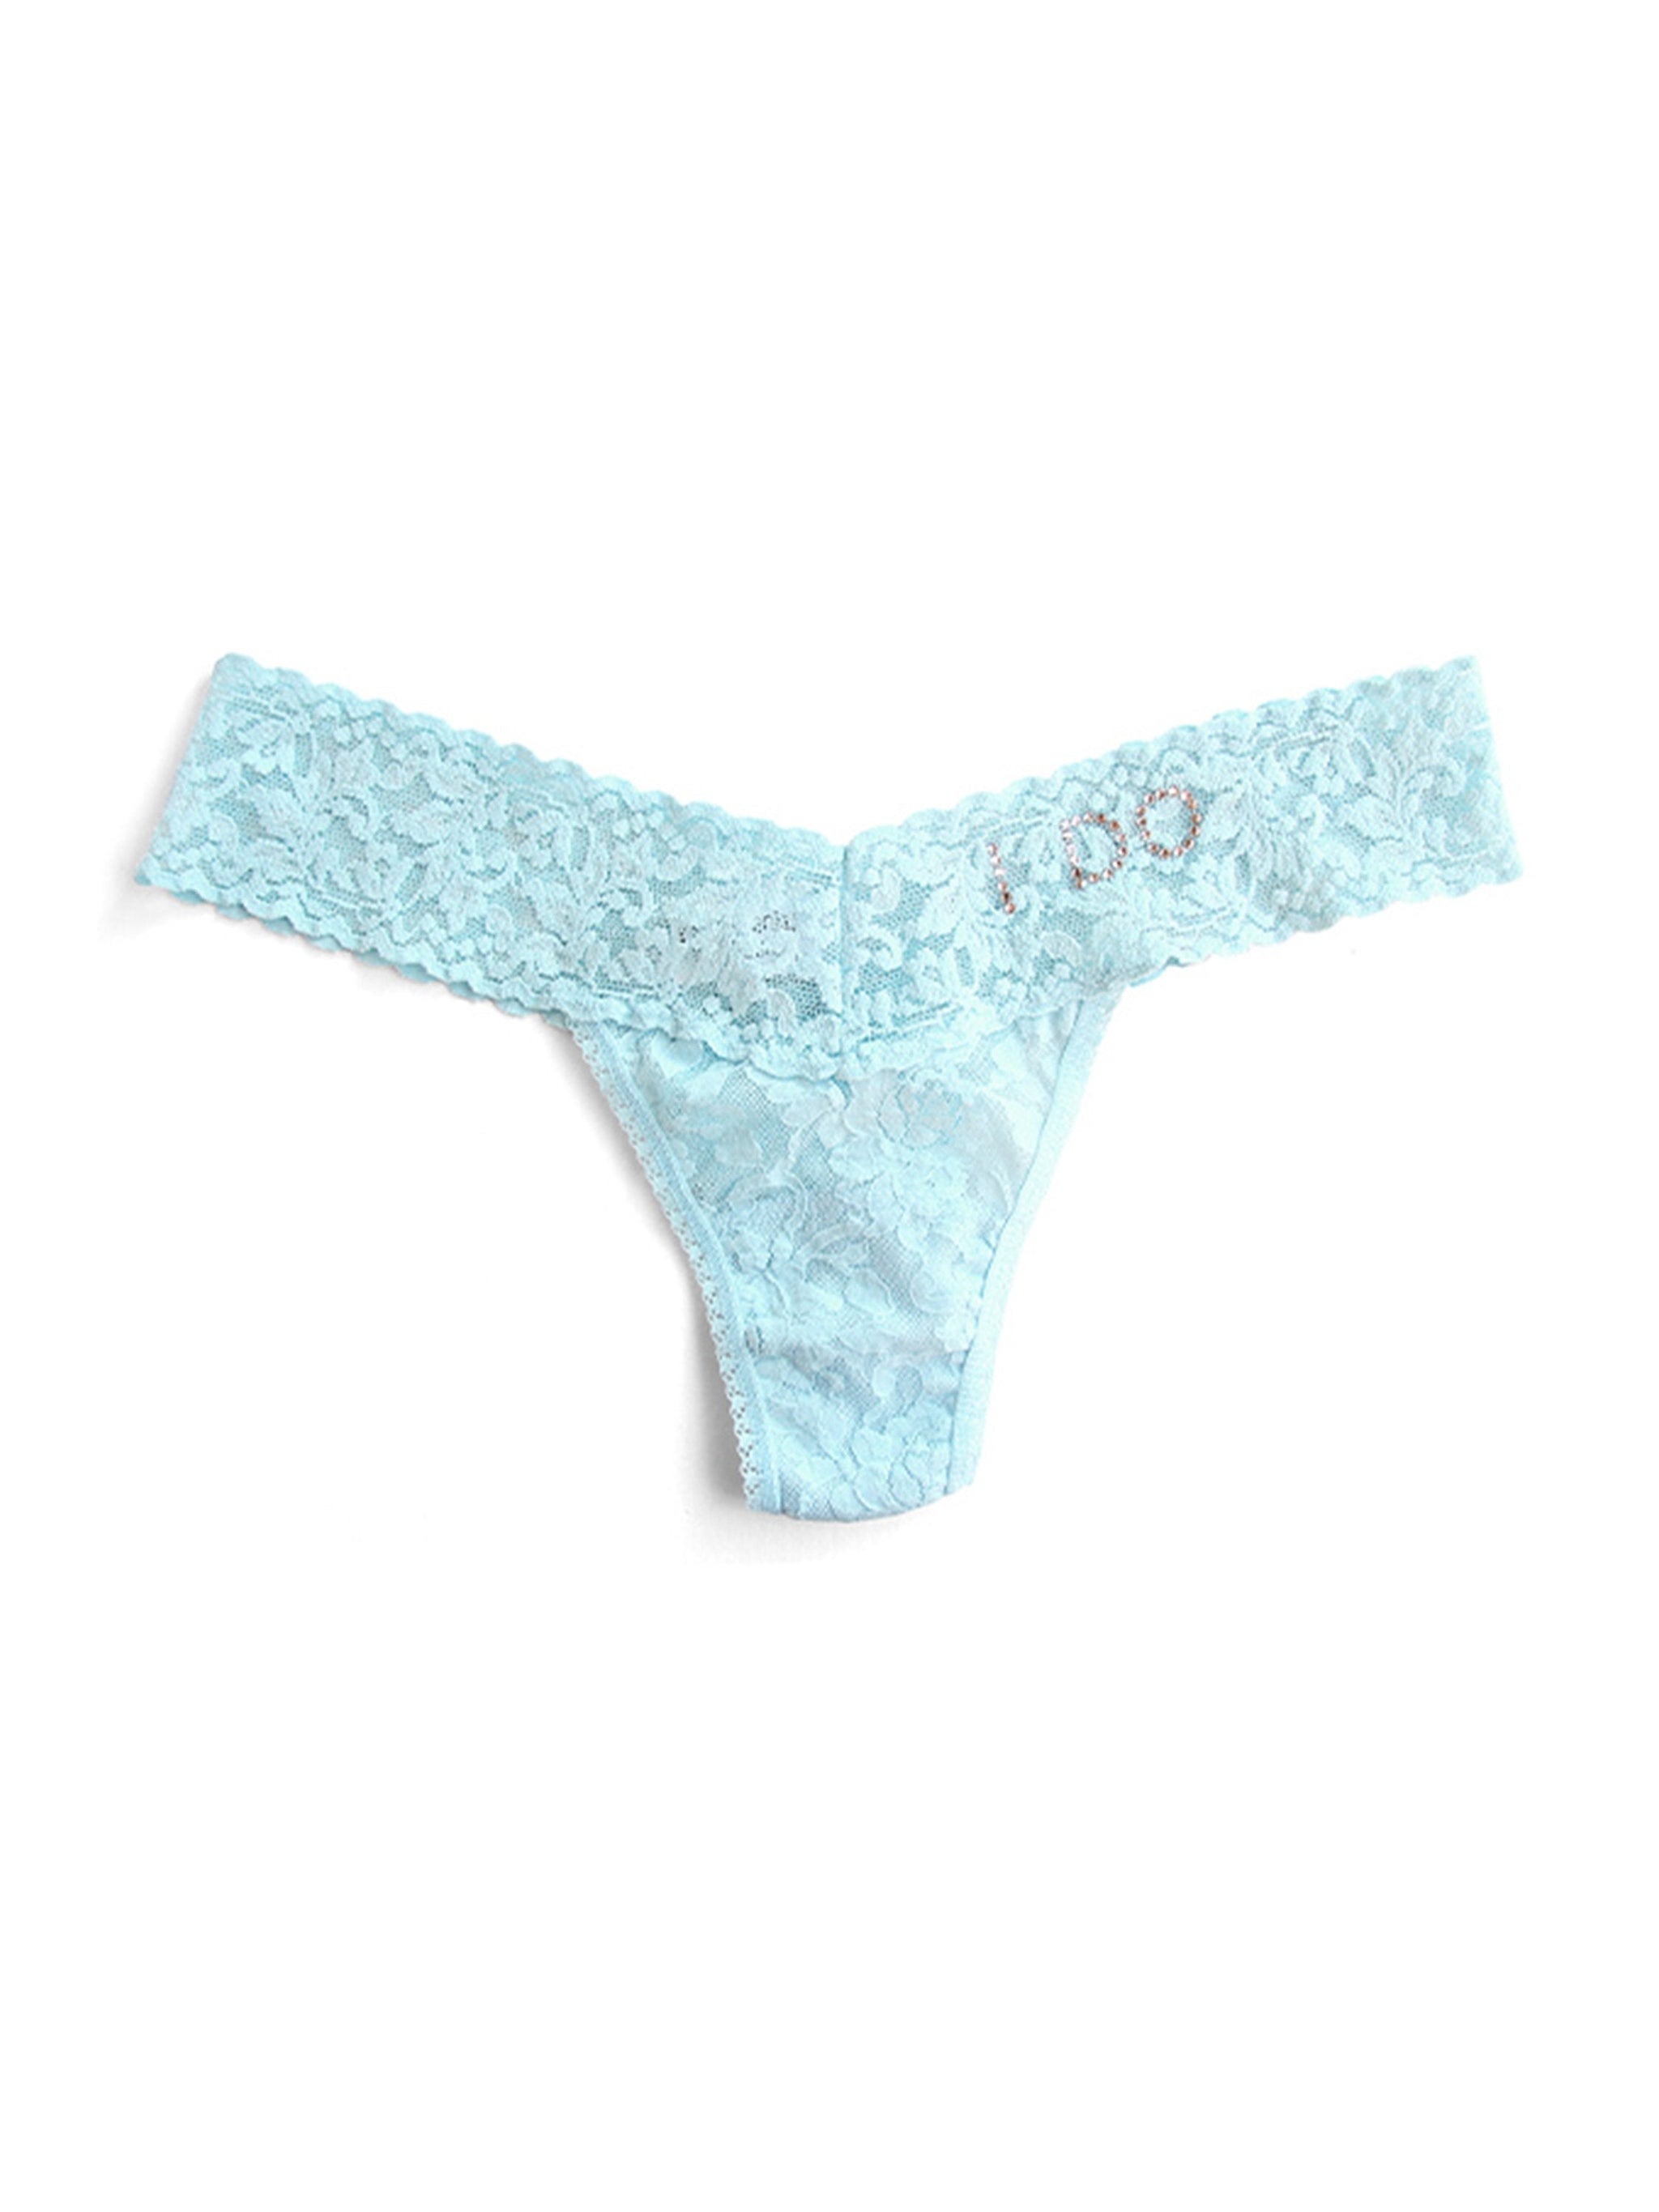 The best bridal underwear 2020 - Collection Bouquet - Preshaped